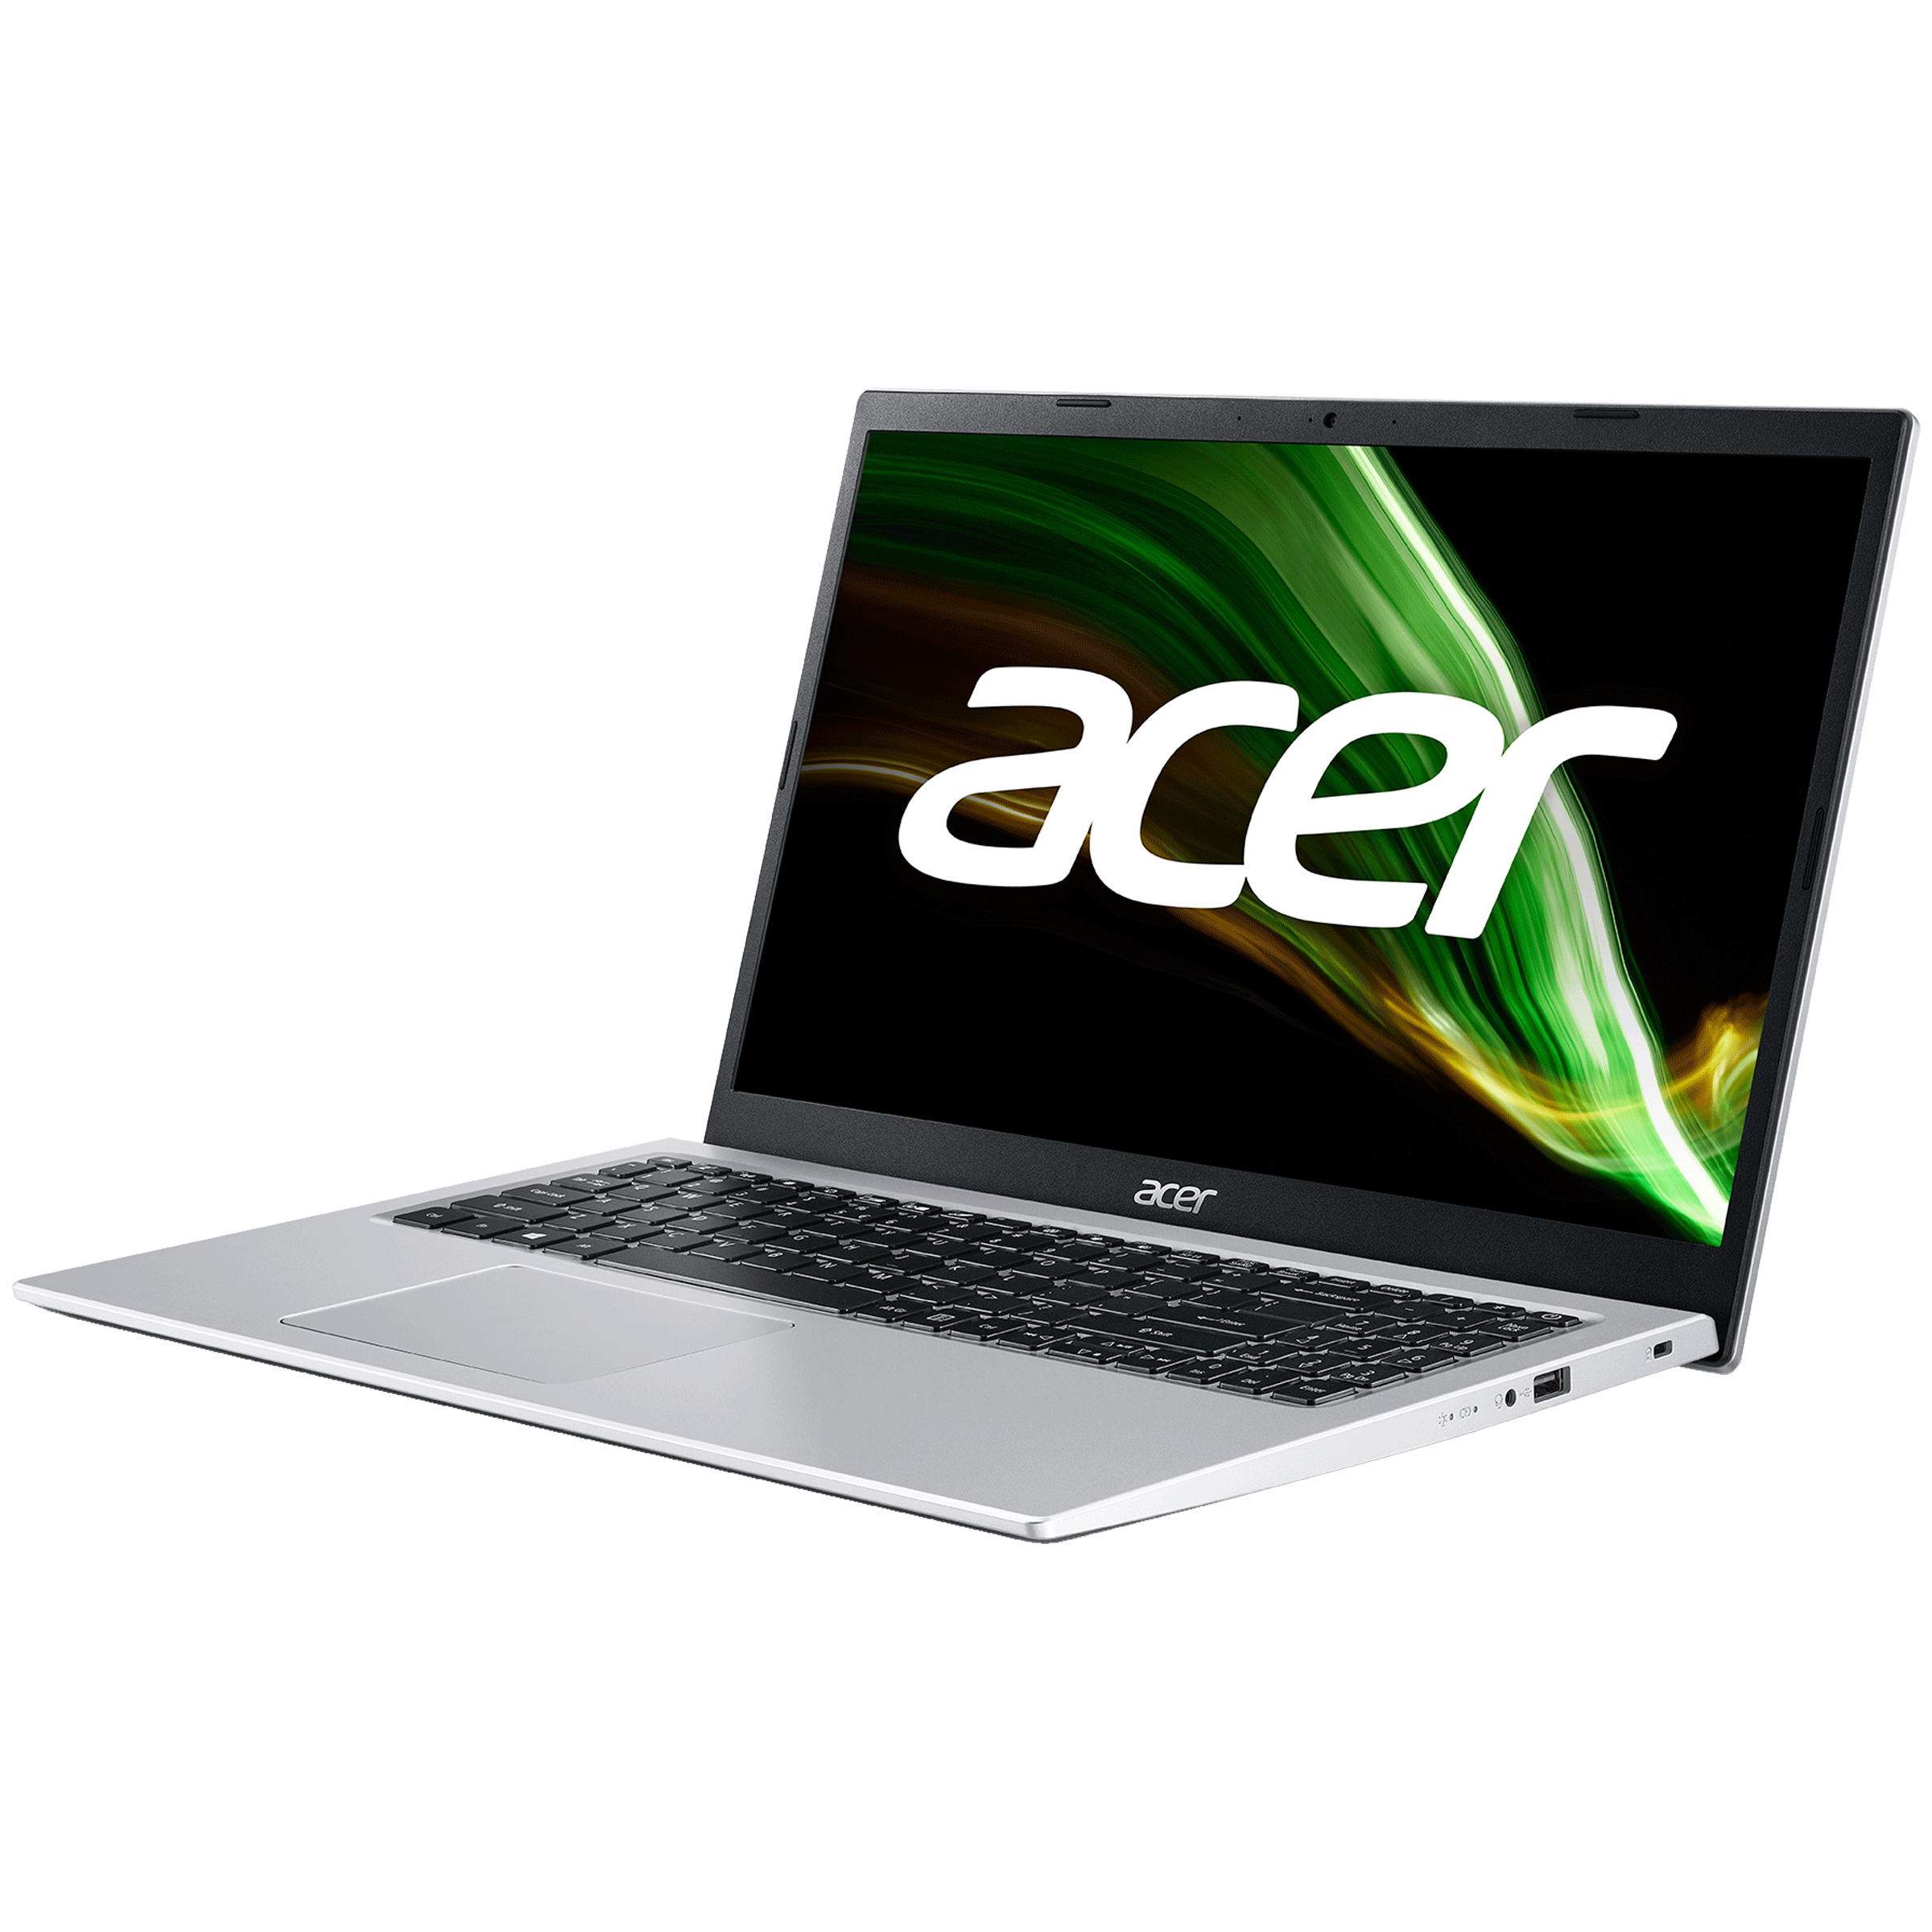 Acer A315-58 11th Gen Core i3 Windows 10 Laptop (8GB RAM, 512GB SSD, Intel UHD Graphics, MS Office, 39.62cm, UN.ADDSI.023, Silver)_3